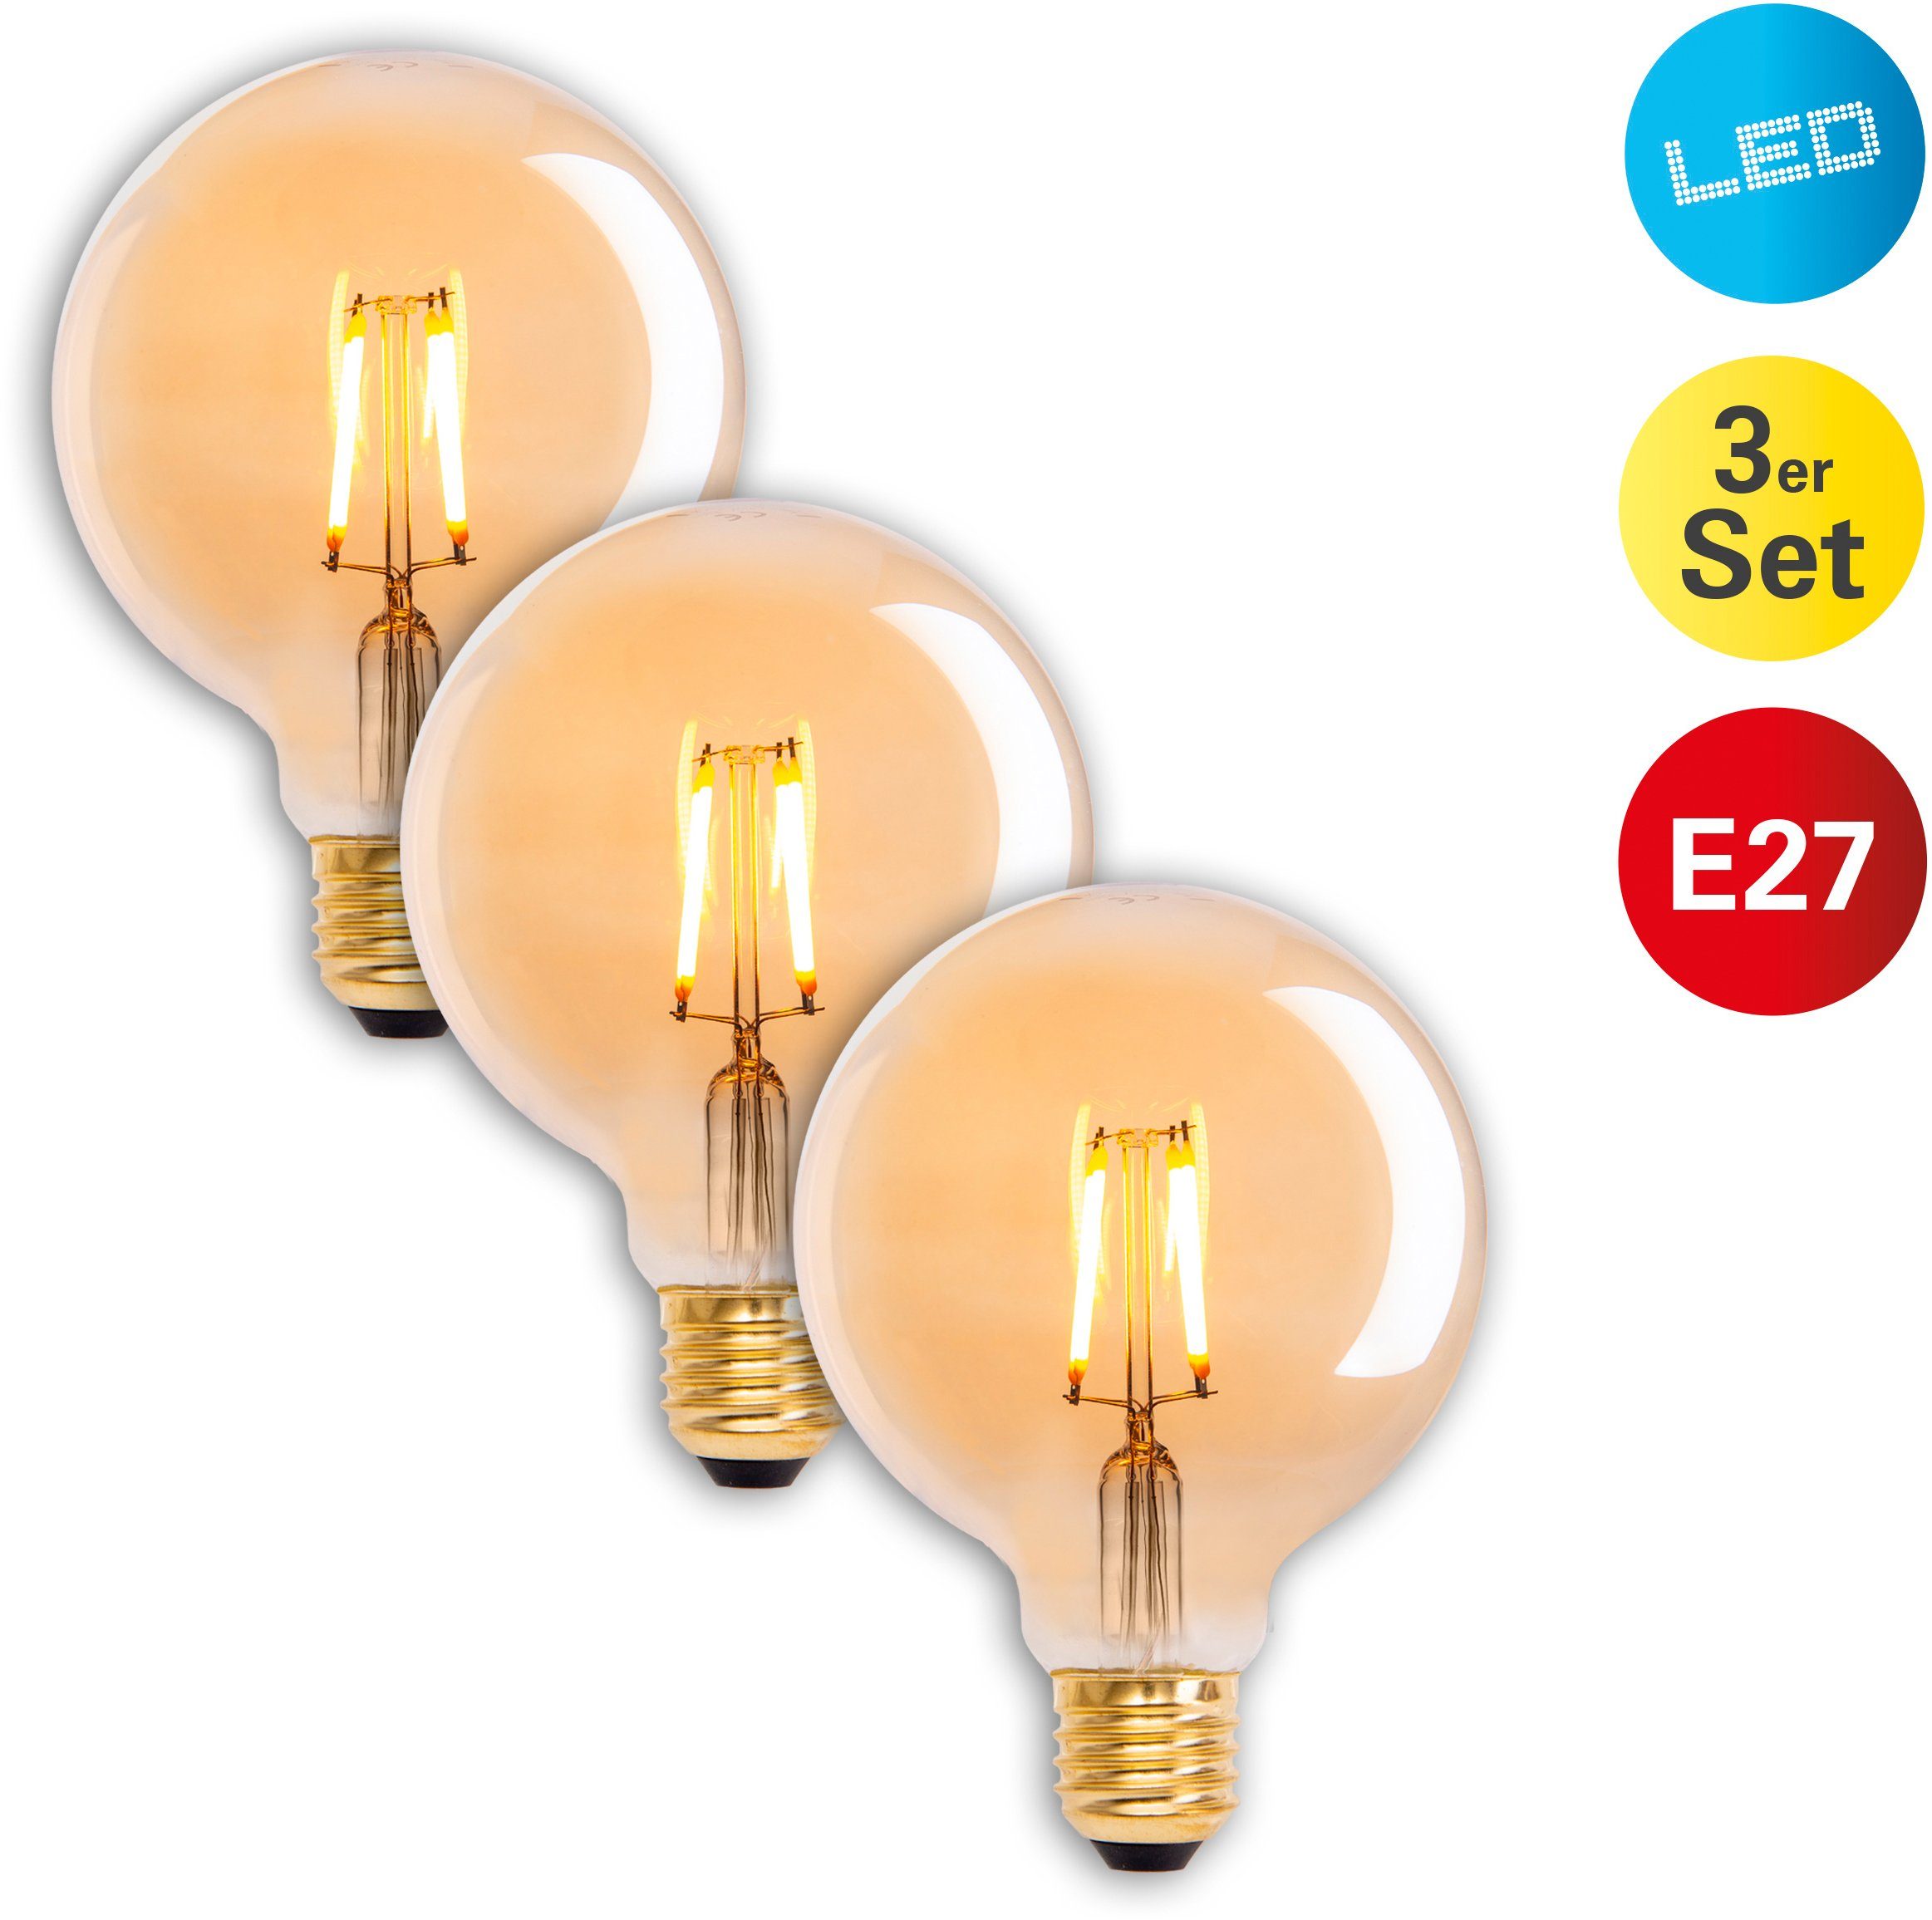 St., näve Reto E27, 3 Deko 3 Warmweiß, of bulbs, Set Dilly, E27/4.1W Kugel, LED Globlampe LED-Leuchtmittel "Dilly"